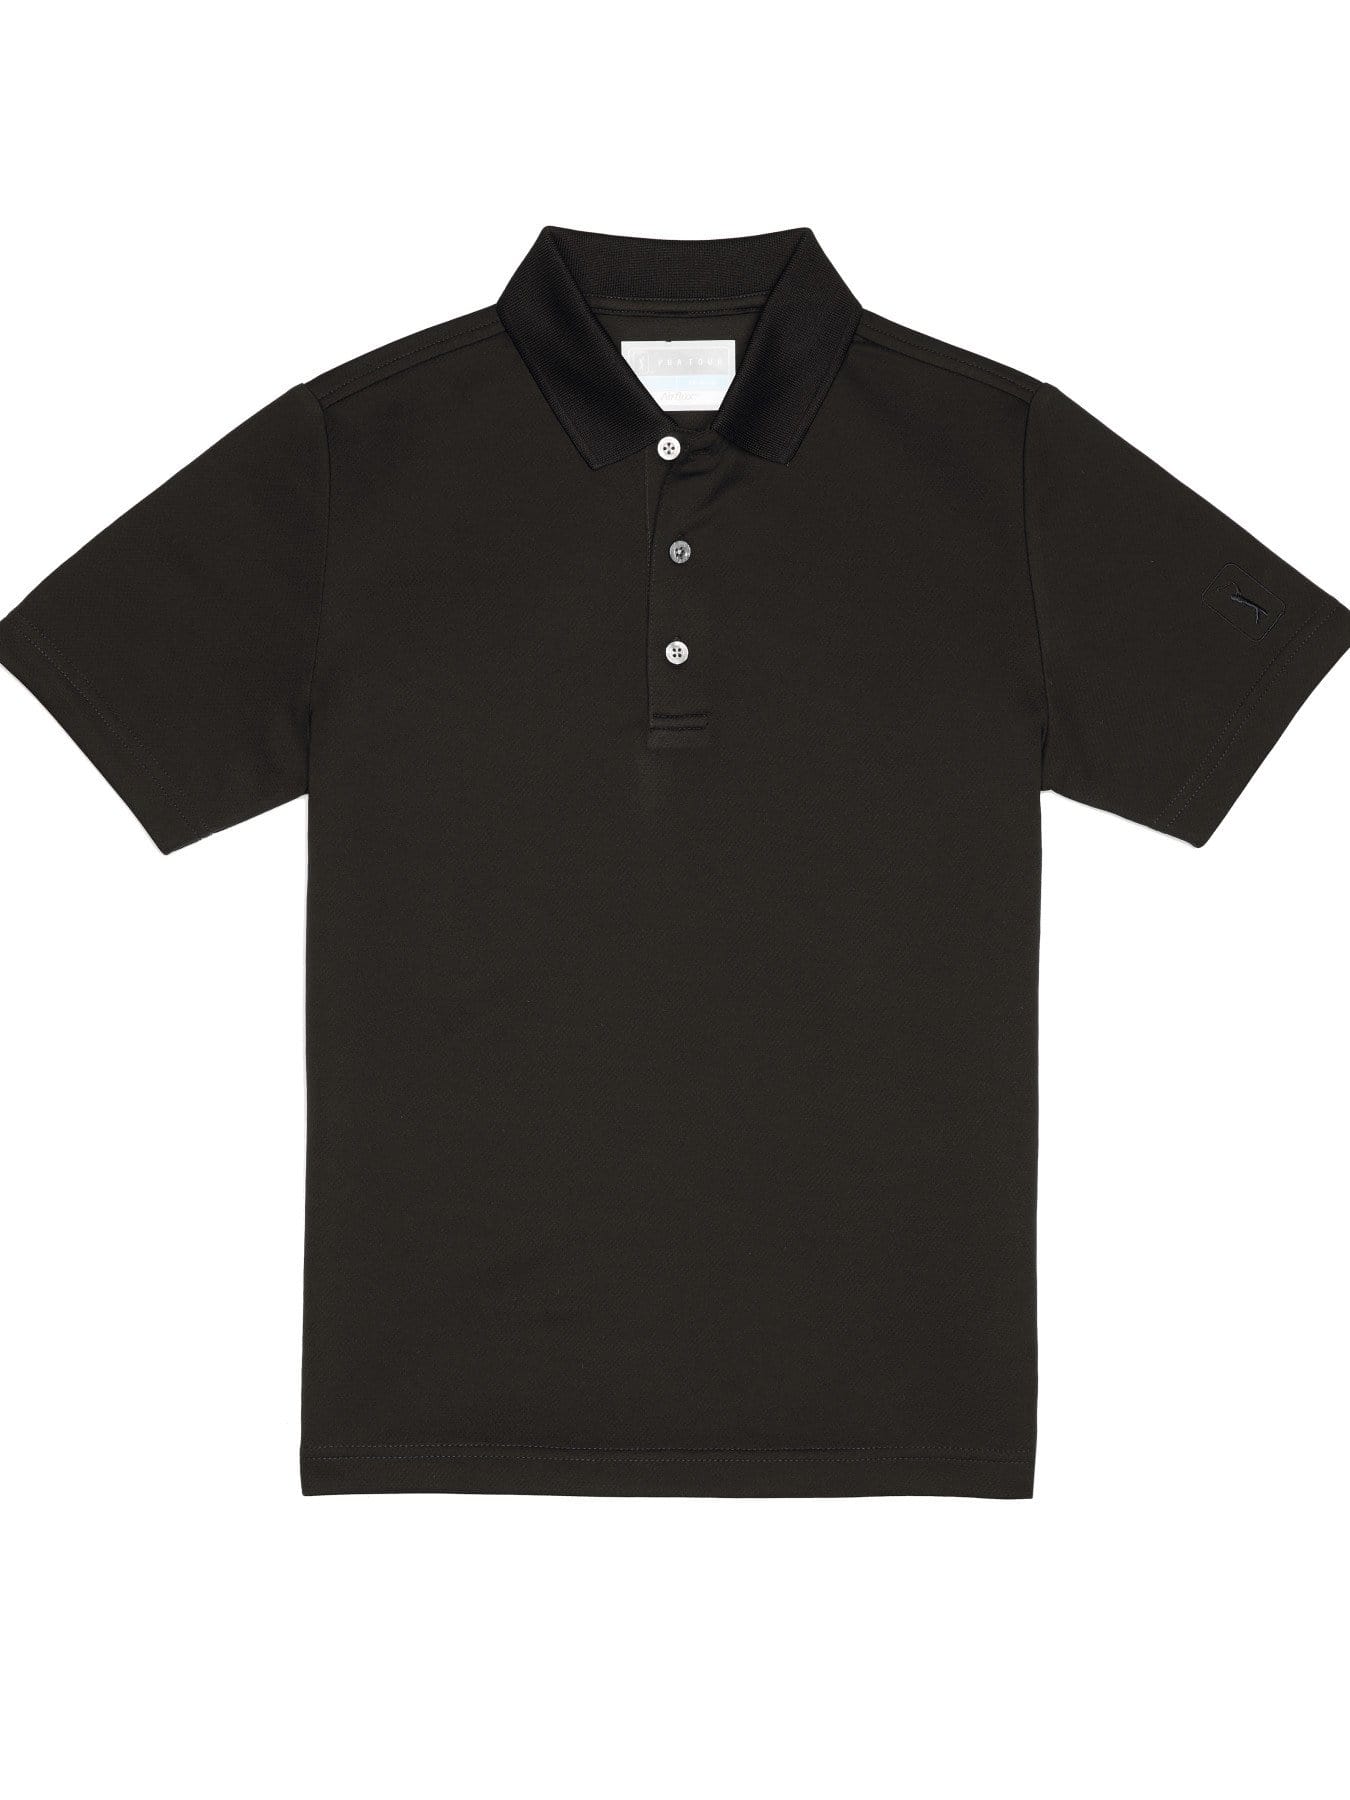 PGA TOUR Apparel Boys Short Sleeve AirFlux™ Polo Shirt, Size Medium, Black, 100% Polyester | Golf Apparel Shop